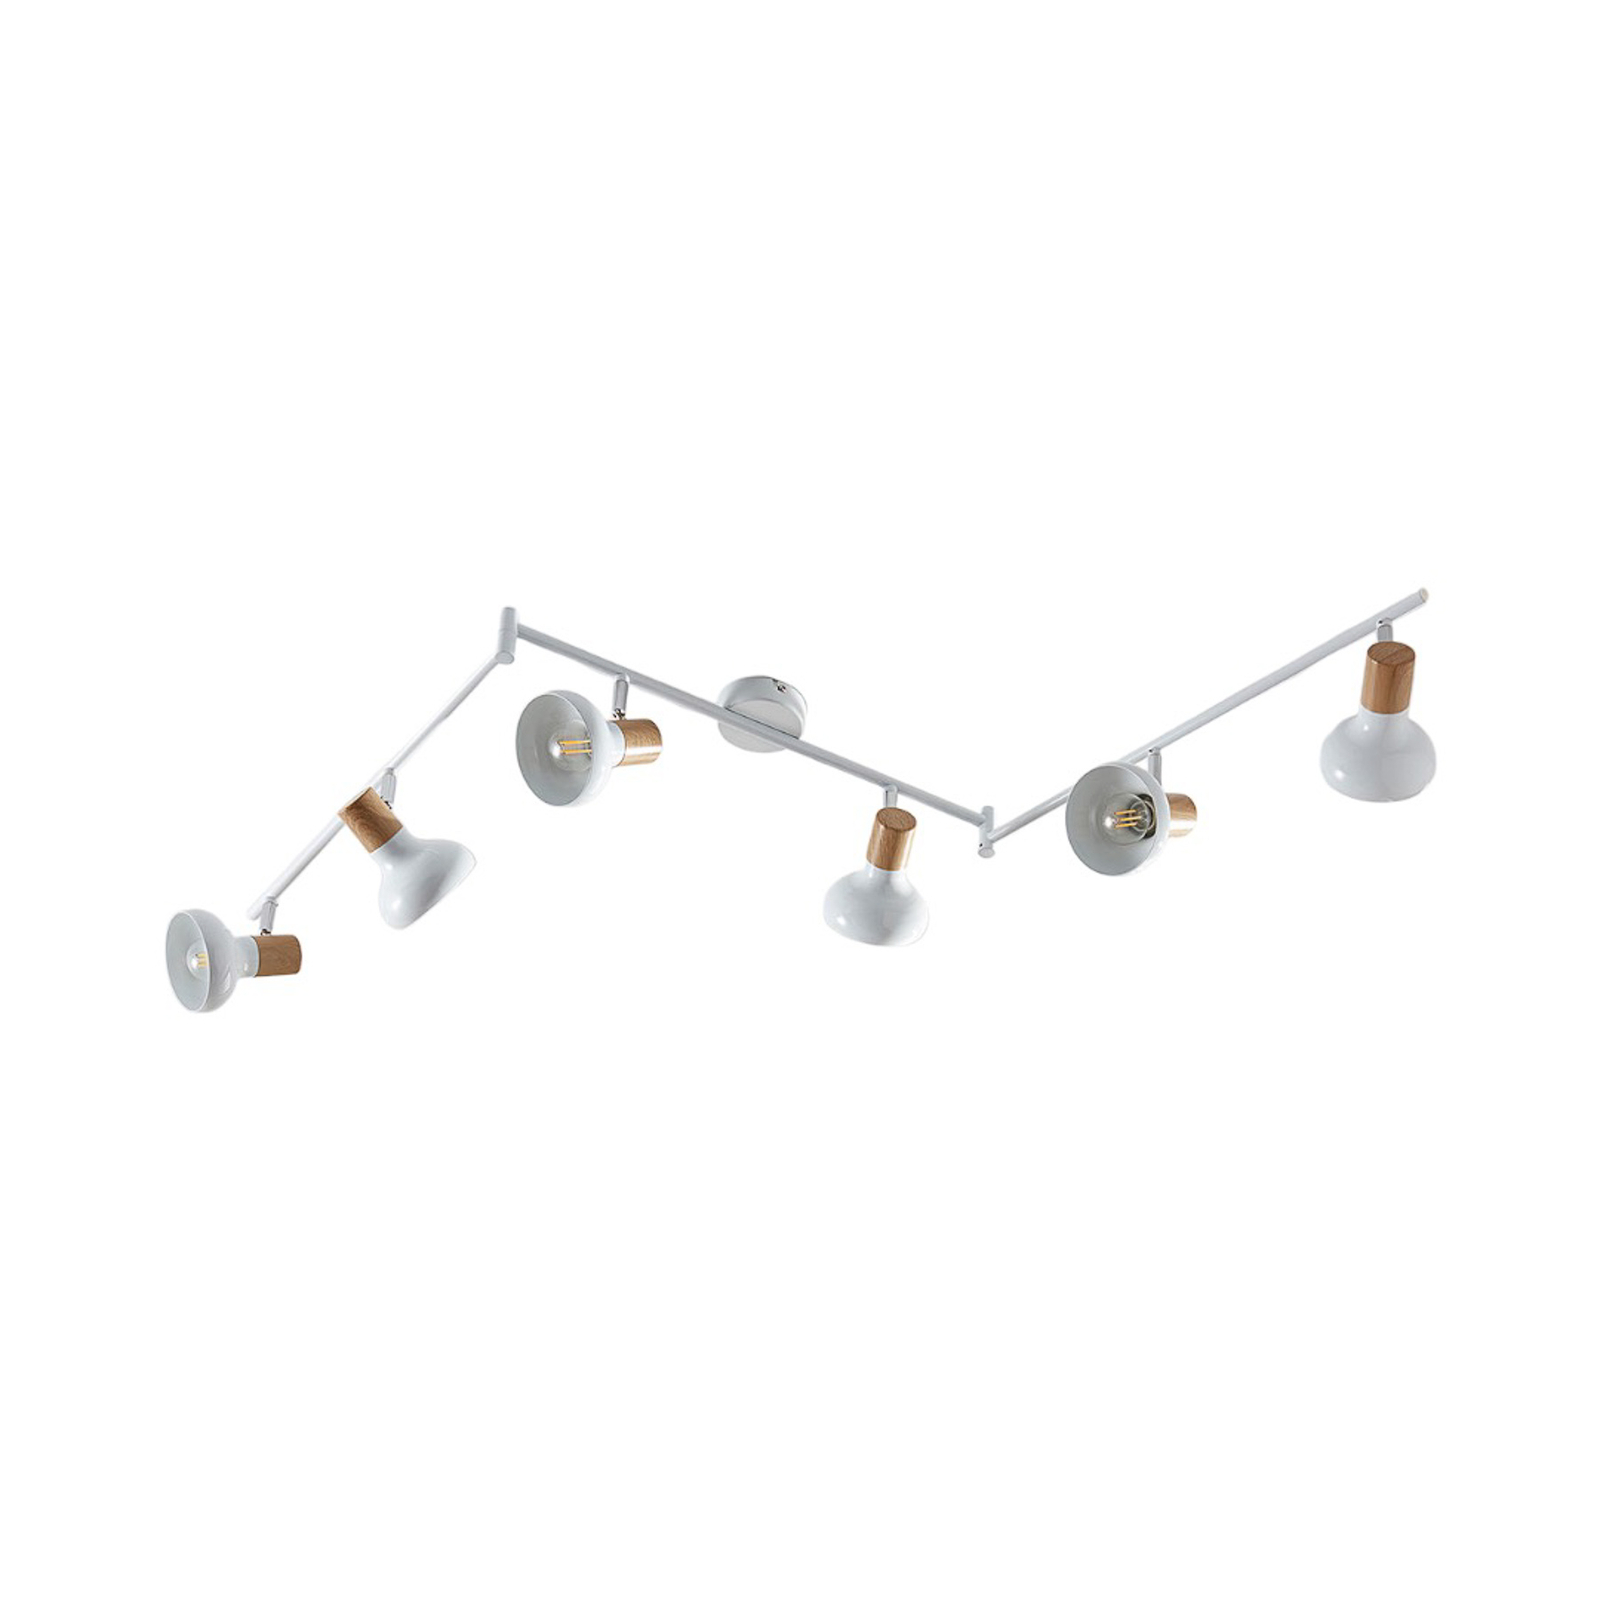 Plafondlamp Fridolin in wit metaal met twee lampen